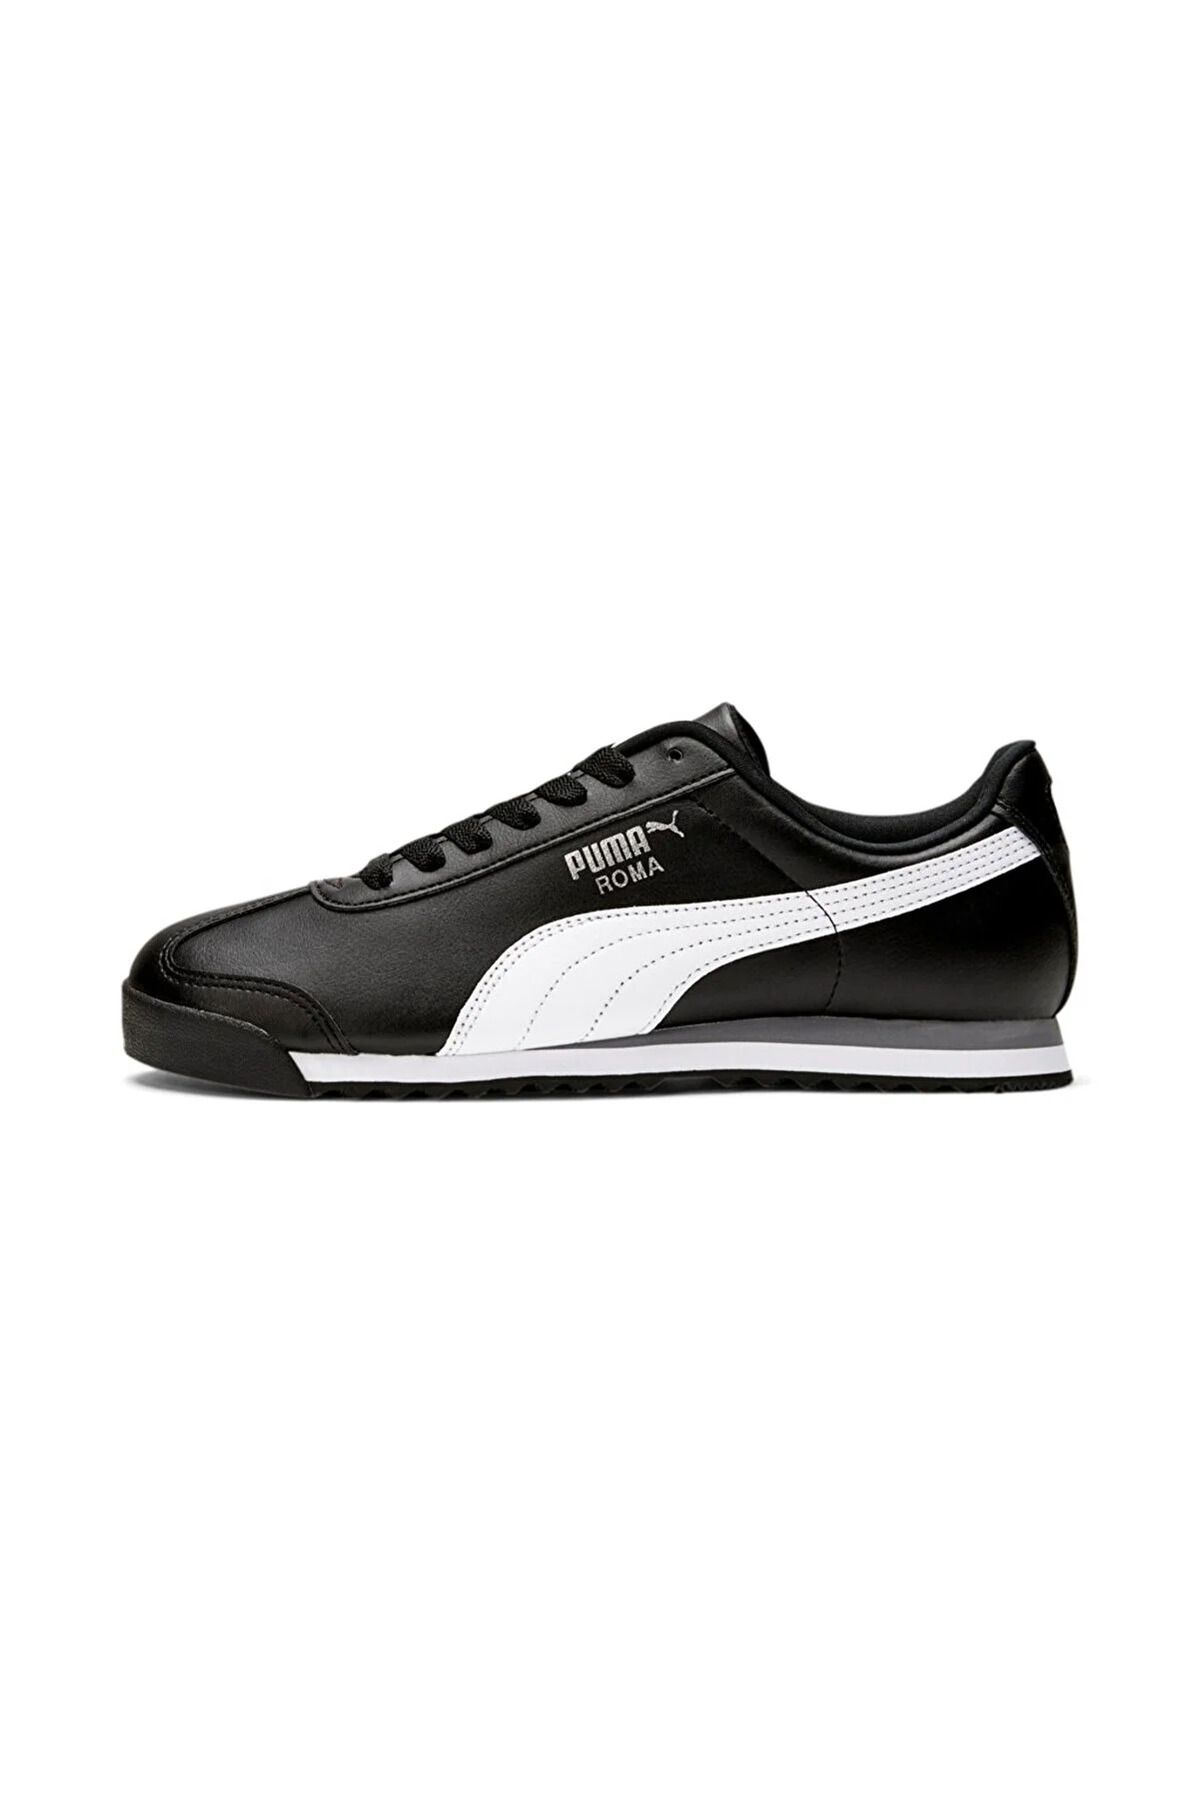 Puma Roma Basic Erkek Sneaker 35357201